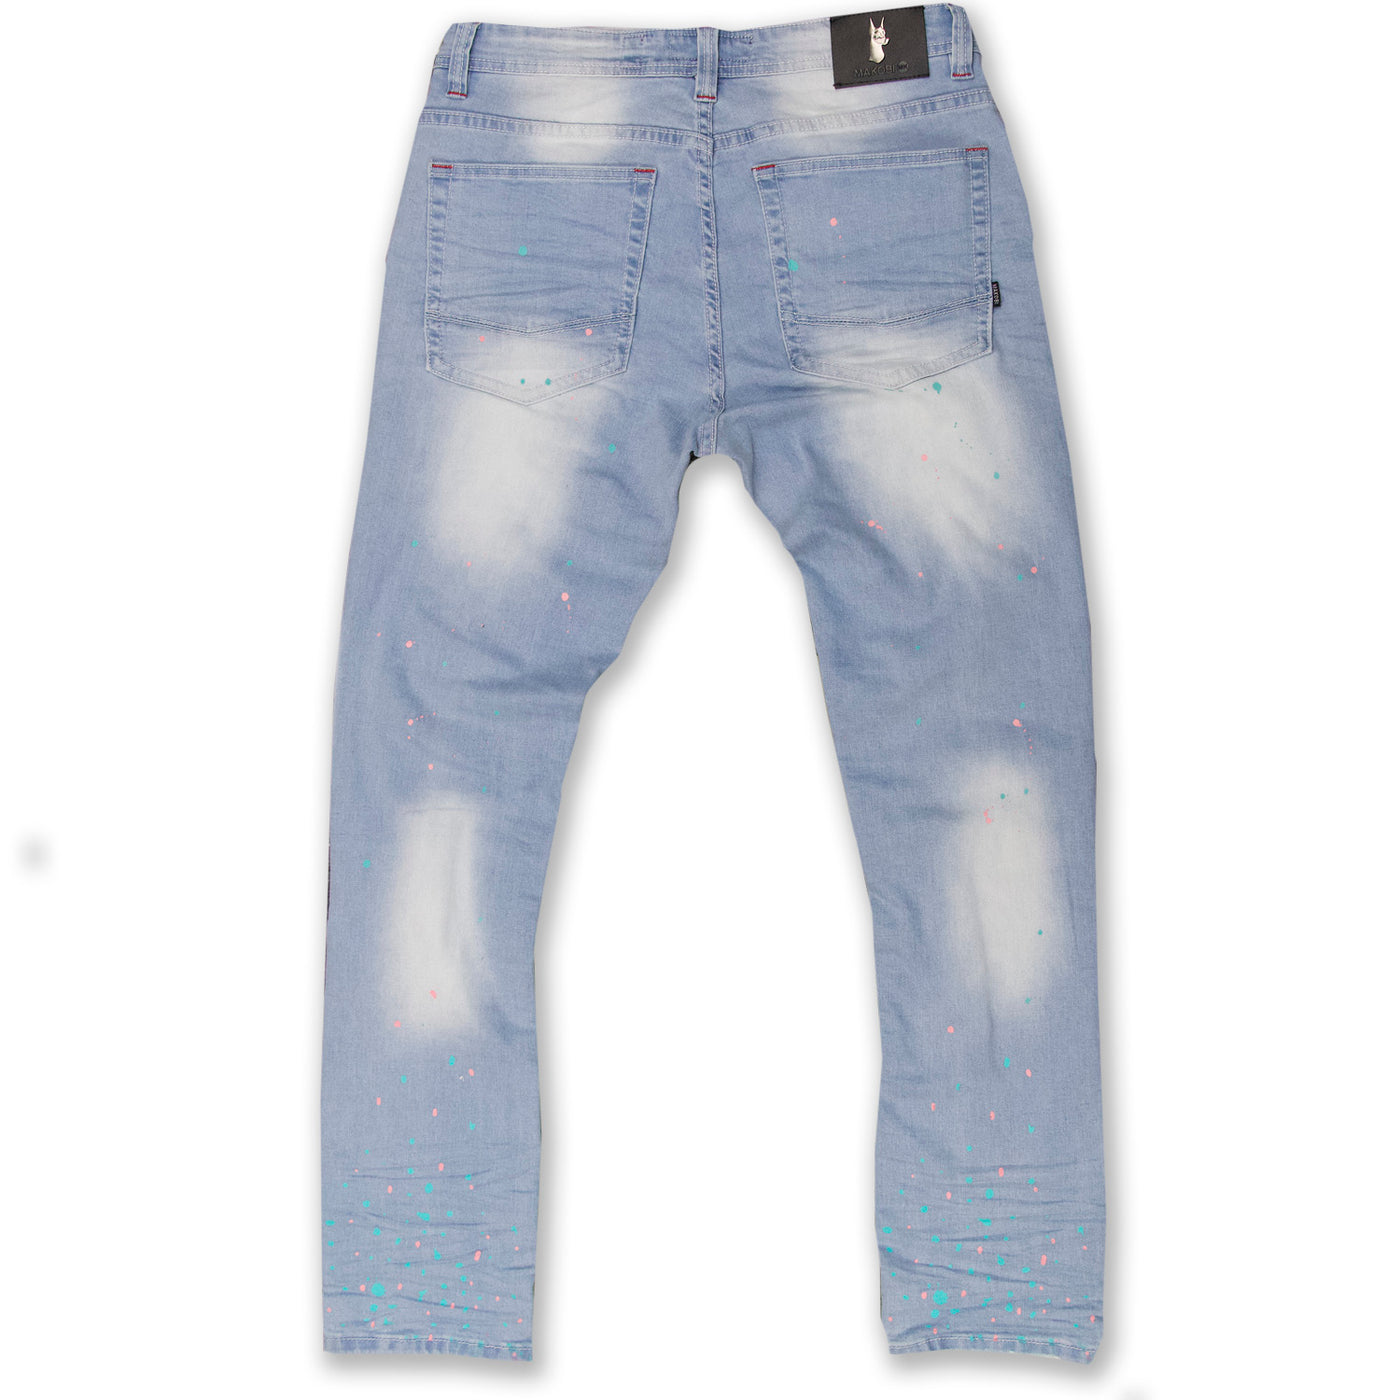 M1783 Makobi Cape Biker Jeans with Paint Splash - Light Wash